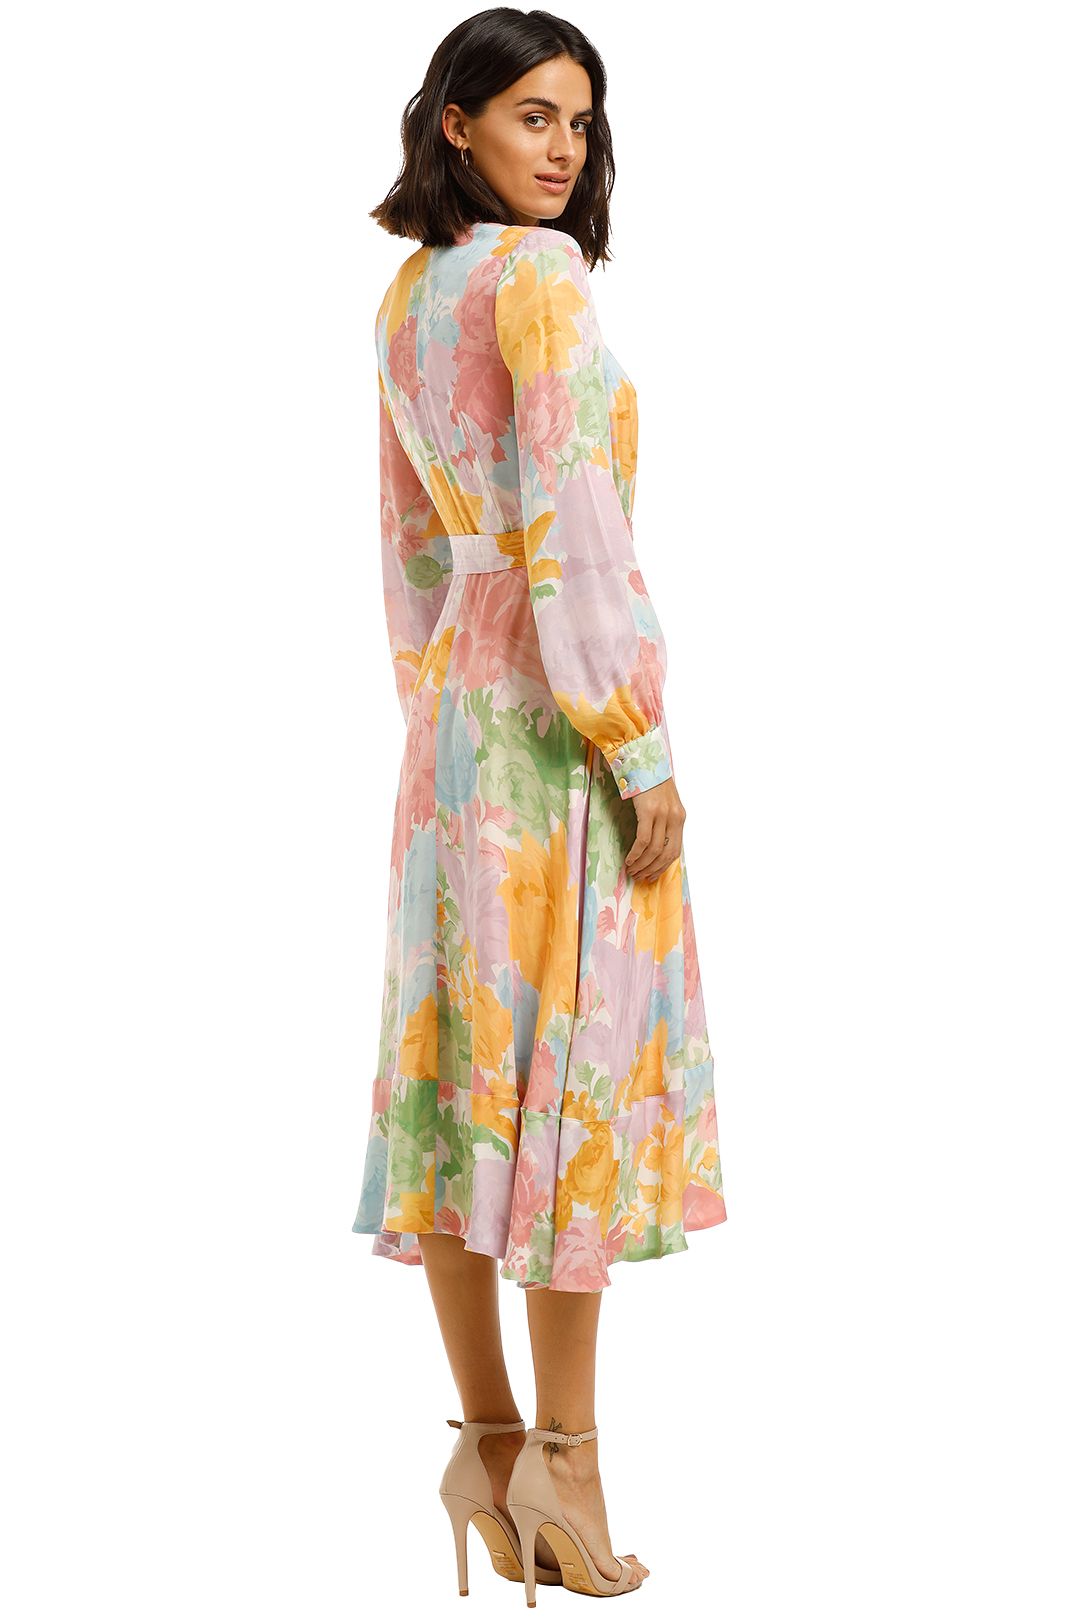 Stine-Goya-Reflection-Dress-Rose-Garden-Pastel-Back